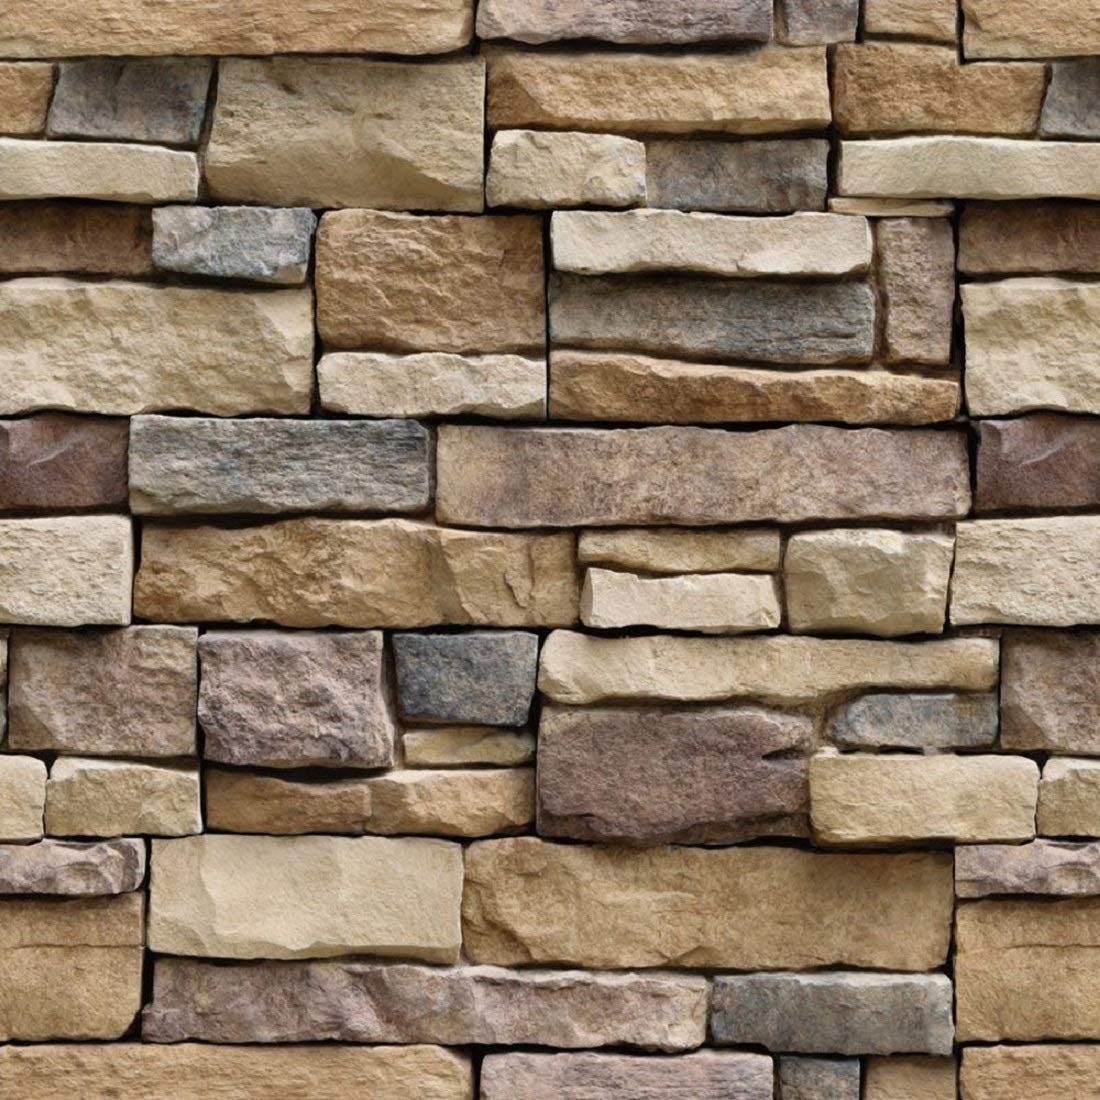 Indian Royals Modern Brick Wall 3D Wallpaper Sticker (PVC, Multicolour): Amazon.in: Home Improvement